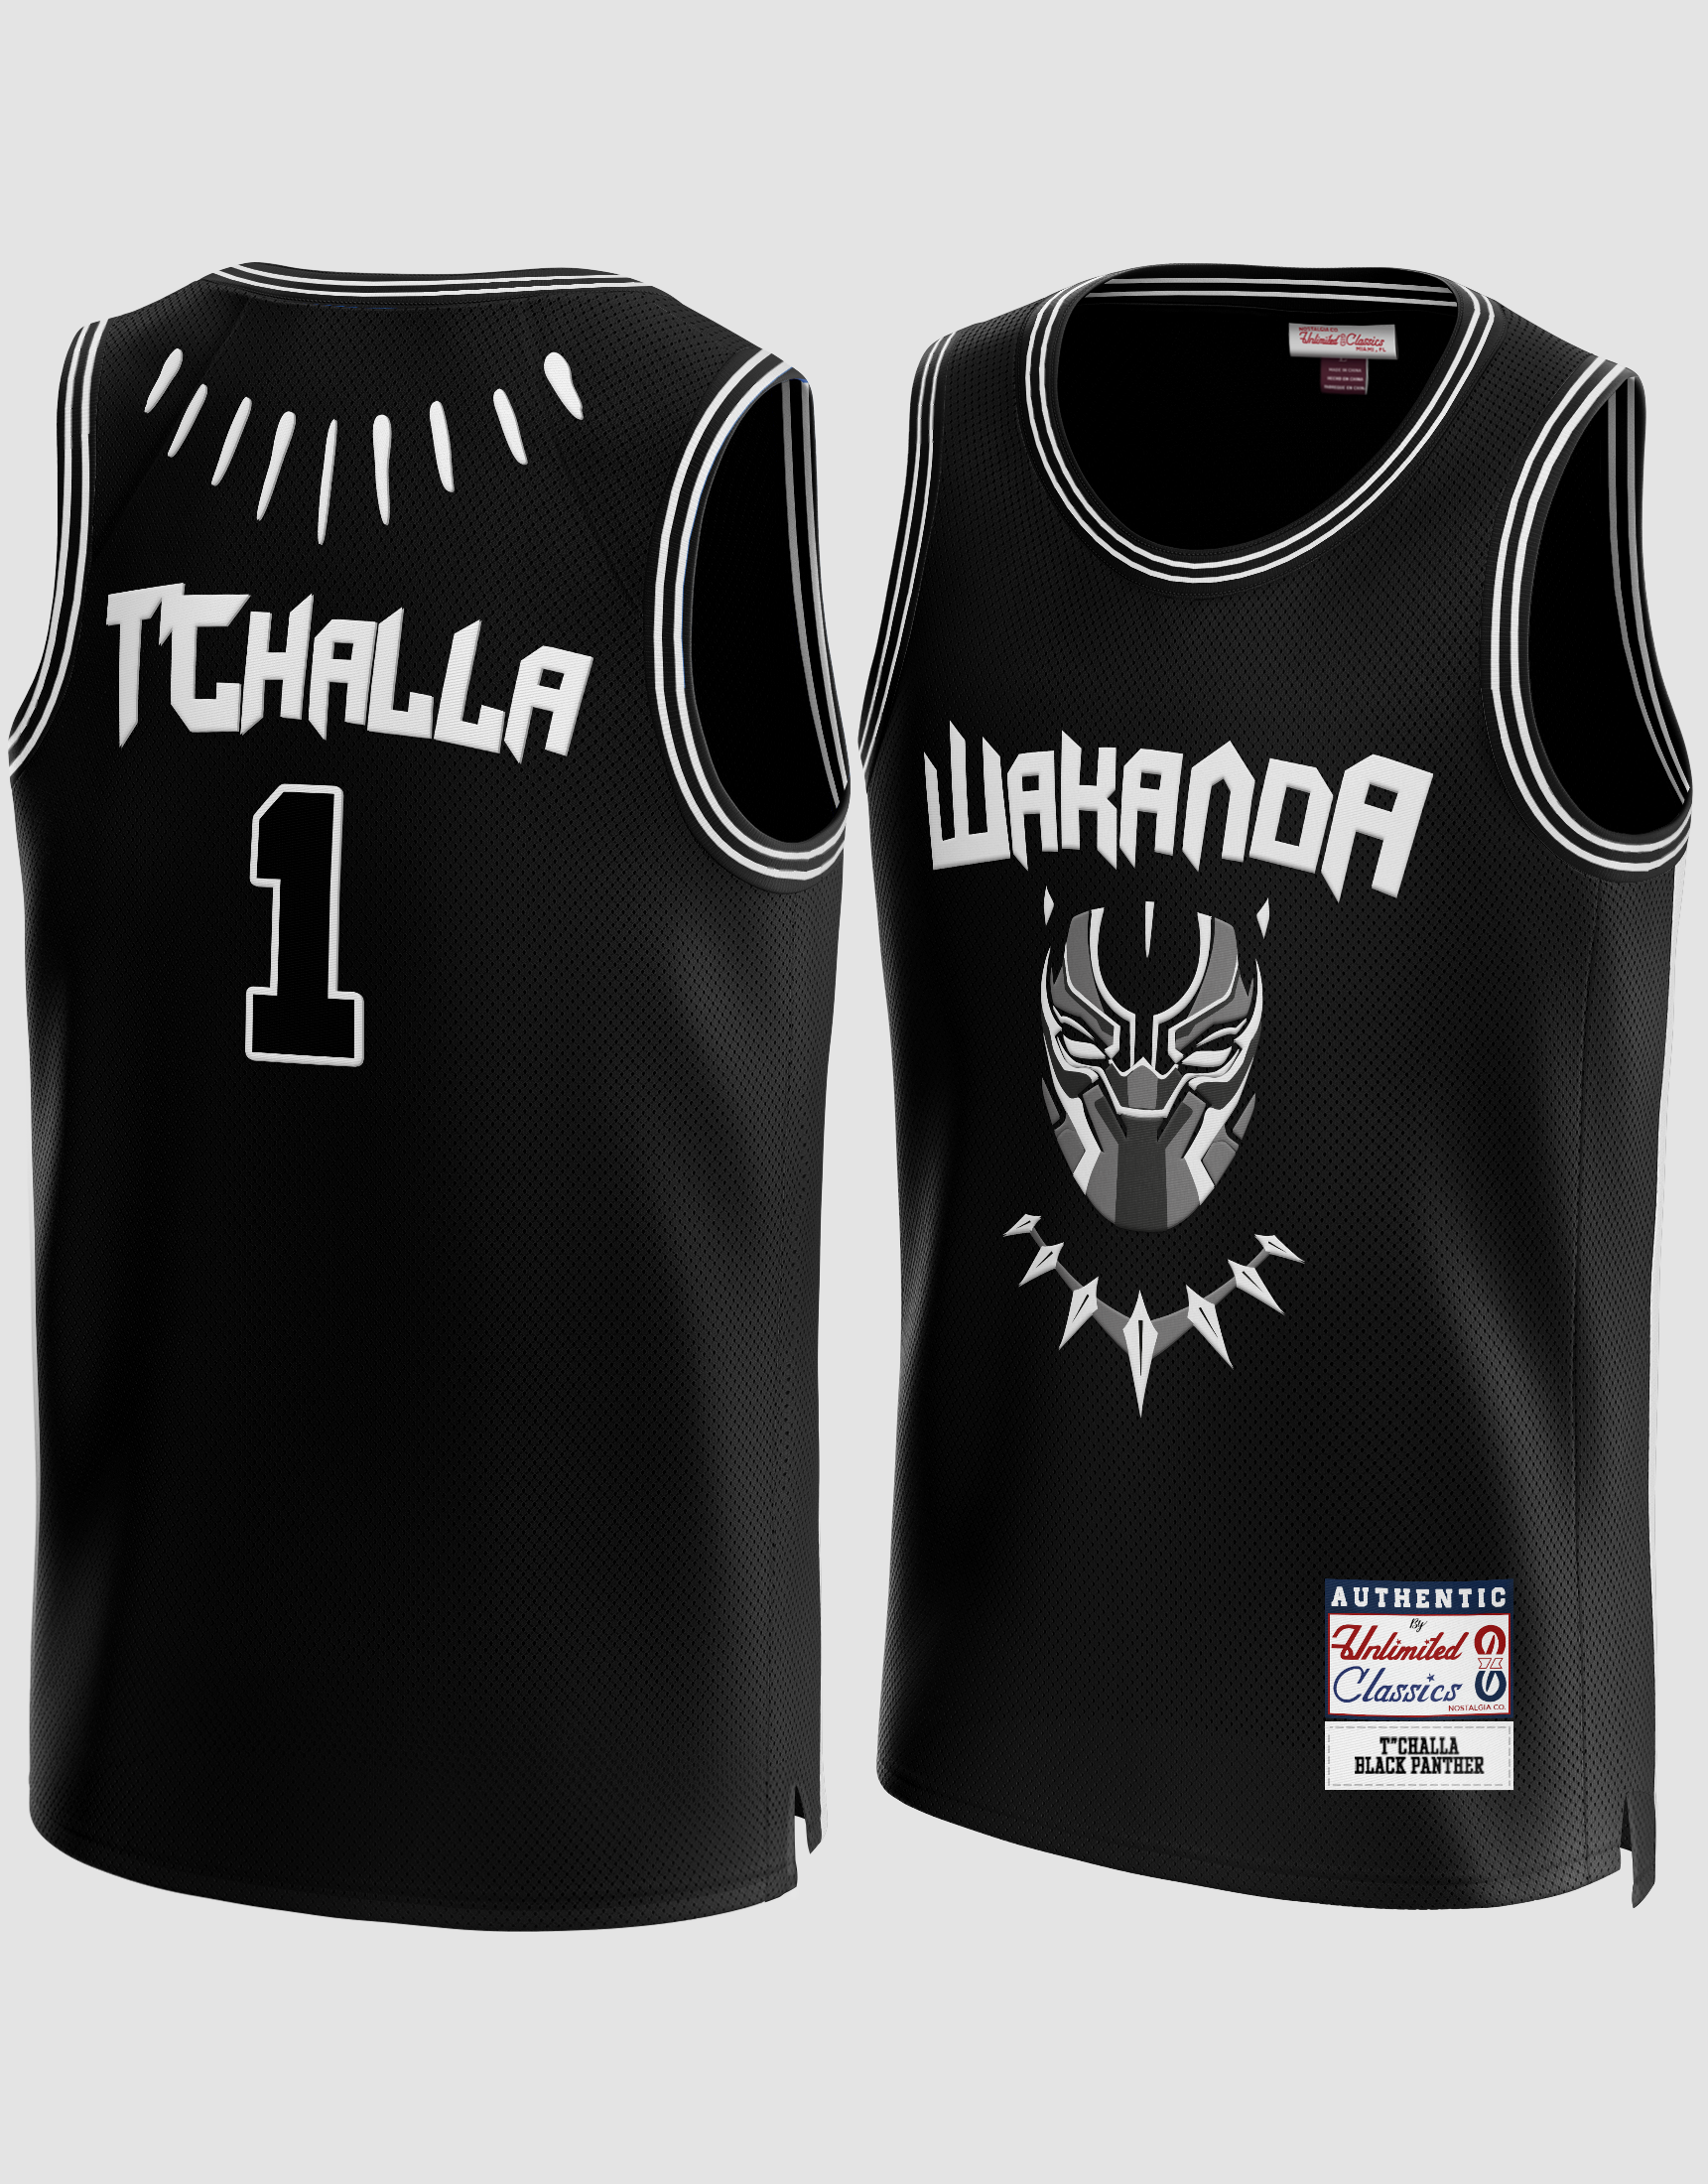 Black Panther Basketball Jersey